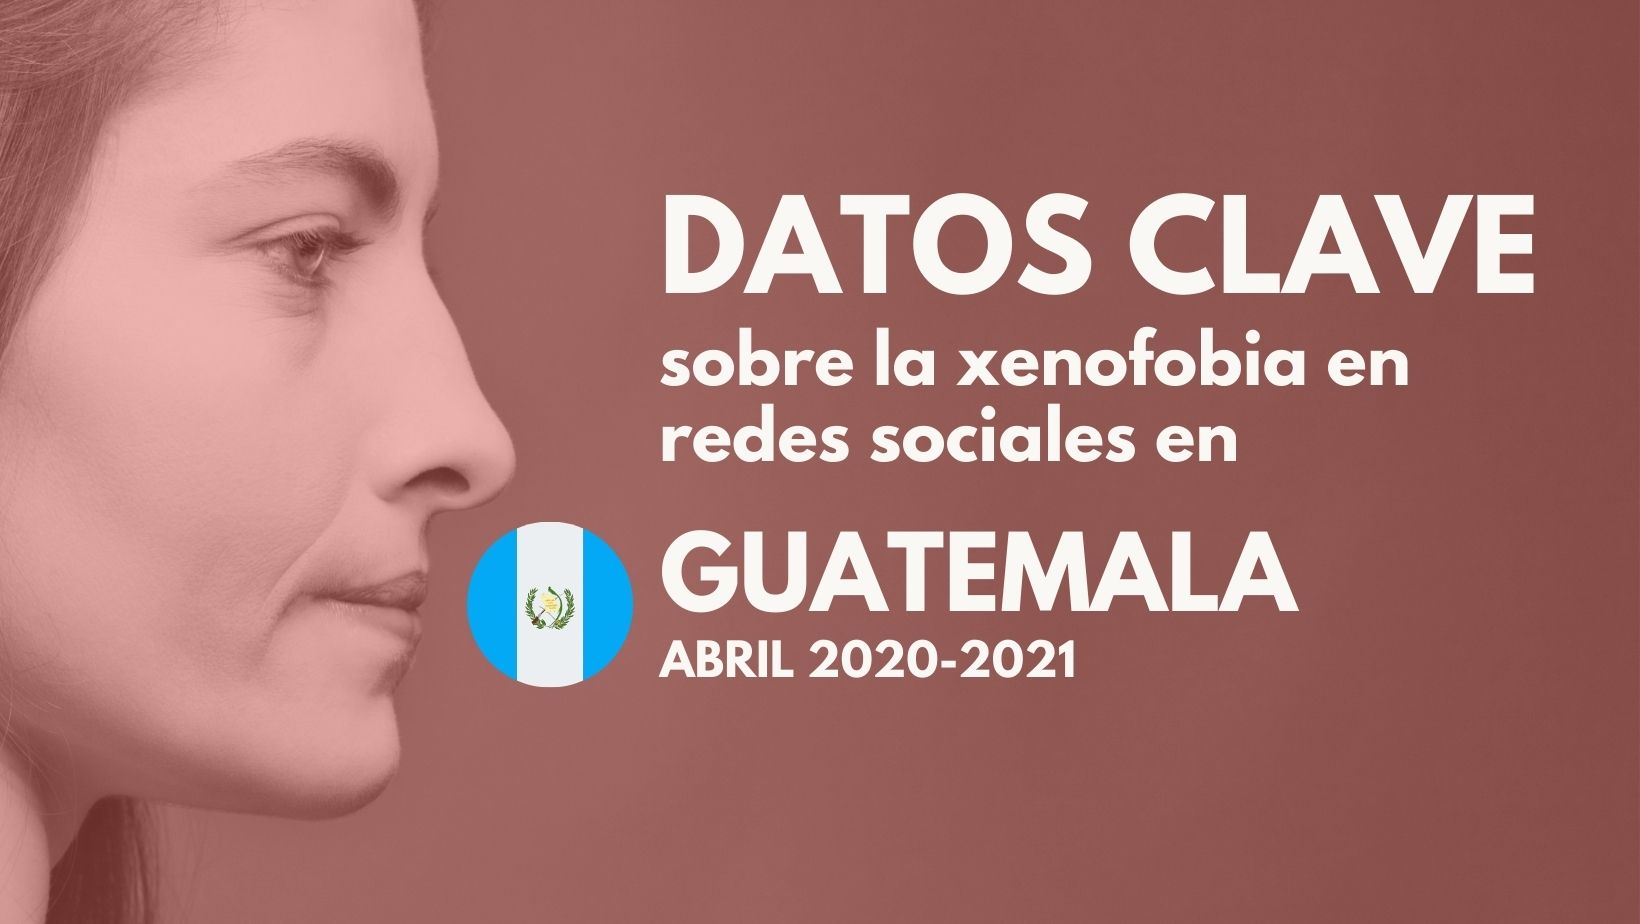 Datos clave xenofobia en línea / Guatemala